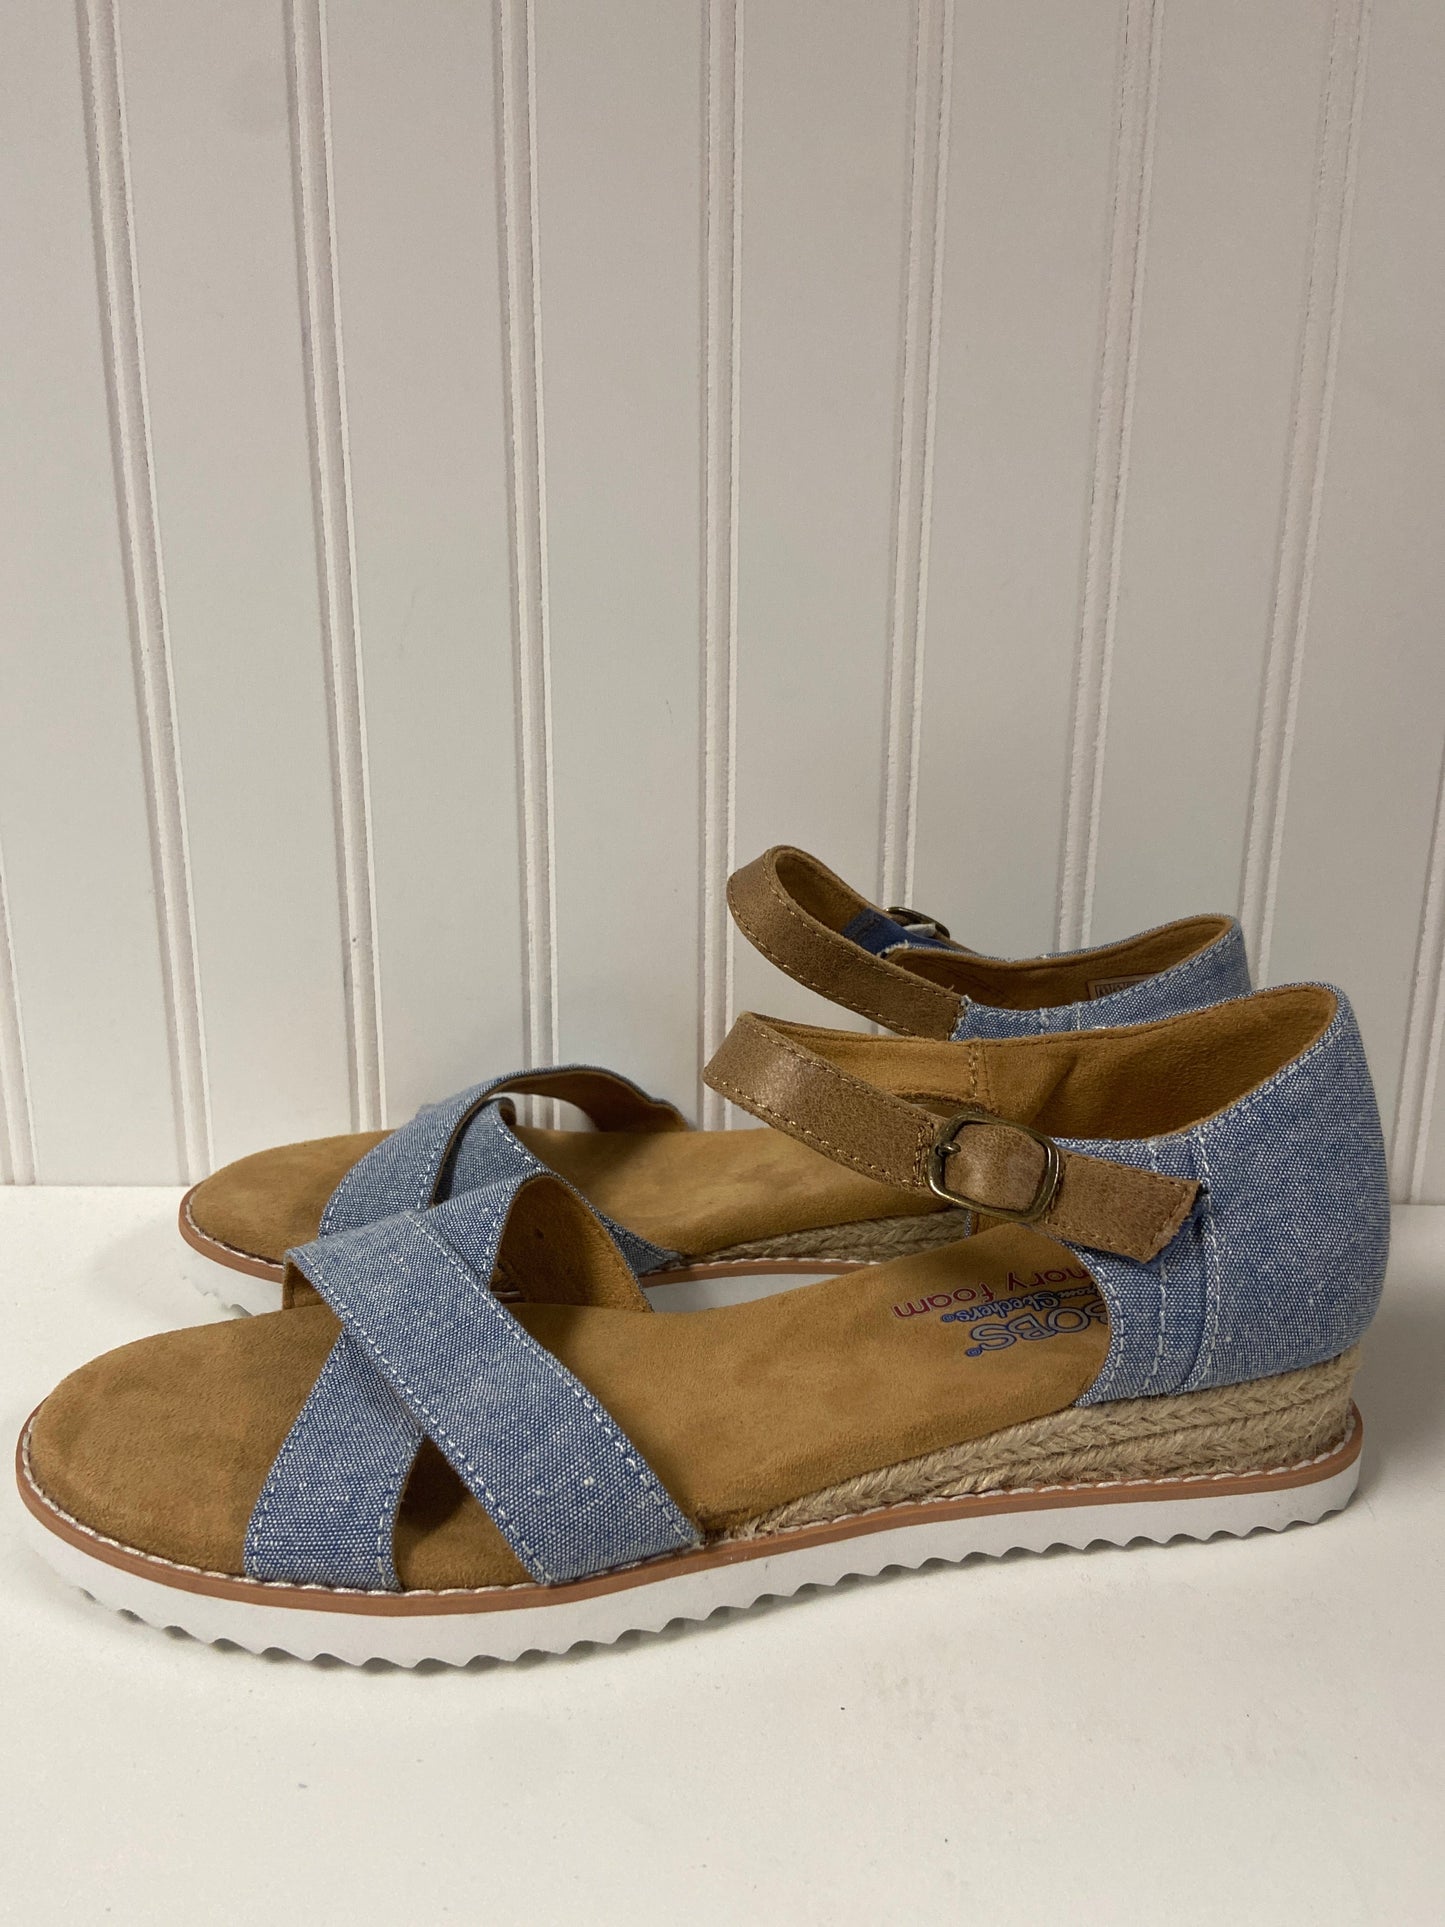 Blue & Brown Sandals Flats Bobs, Size 8.5